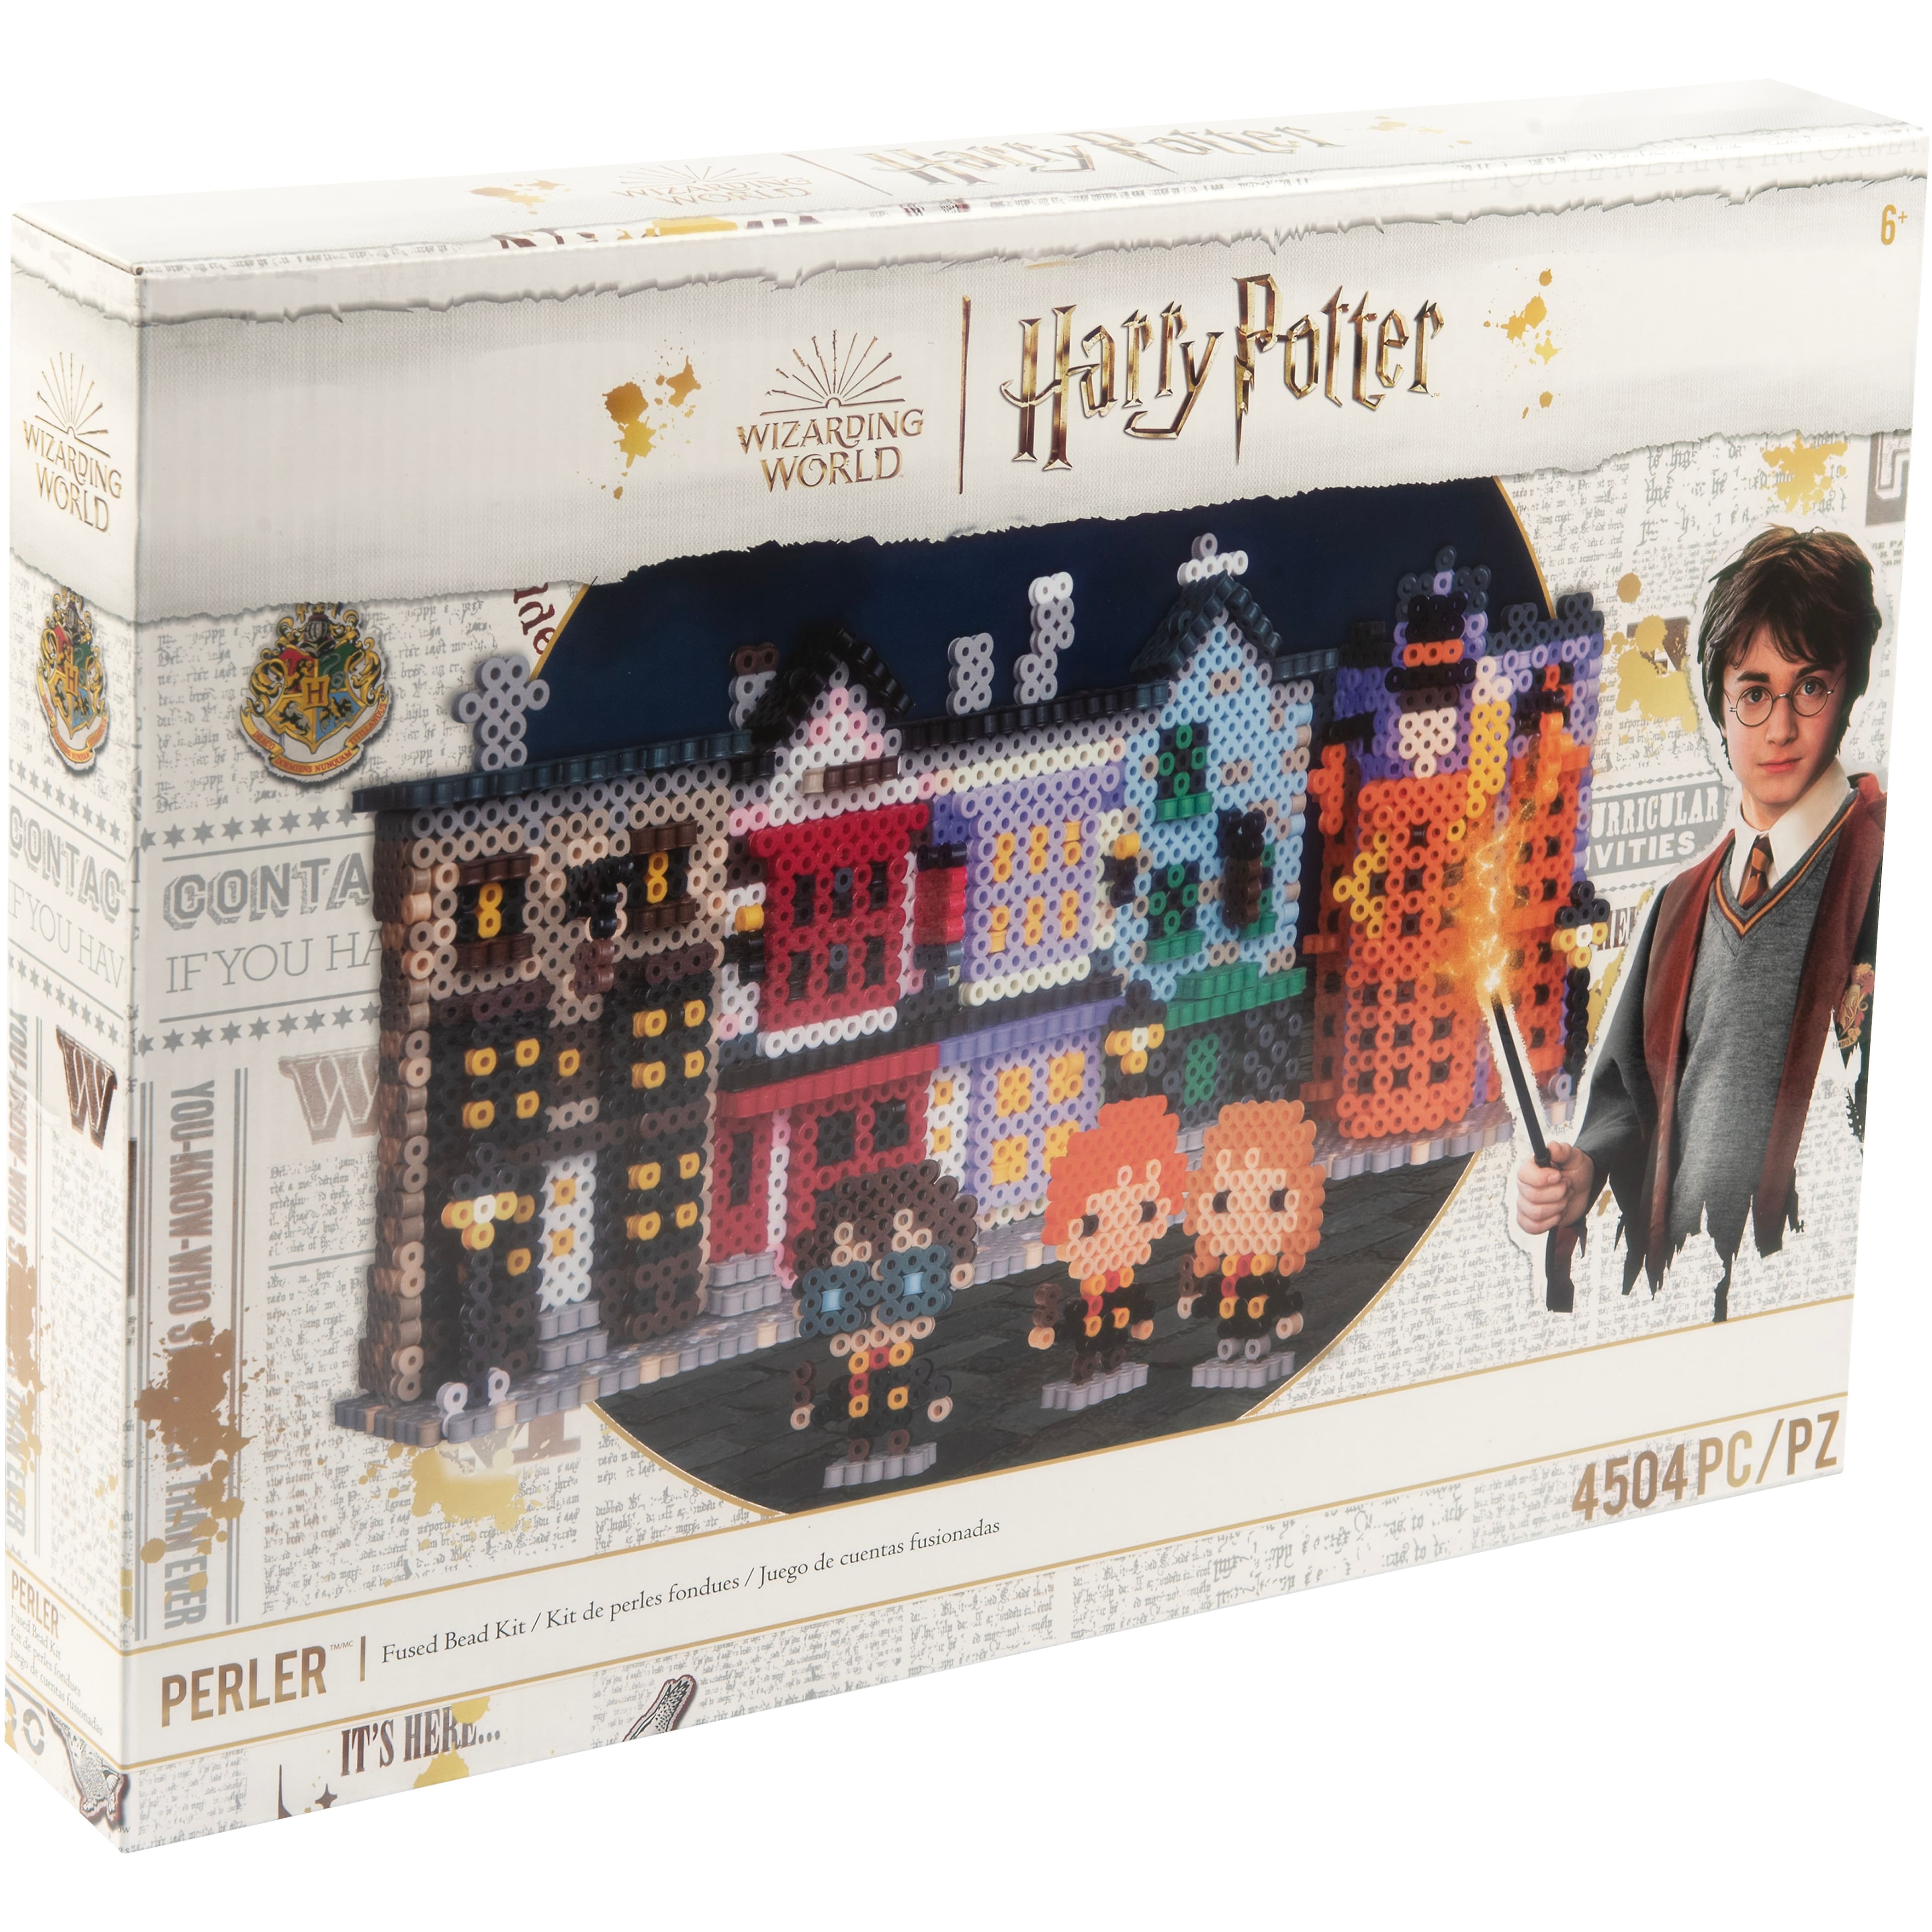 Perler Mega Box Beads Kit Only $19.98 at Sam's Club, Disney Princesses,  Harry Potter, & More!